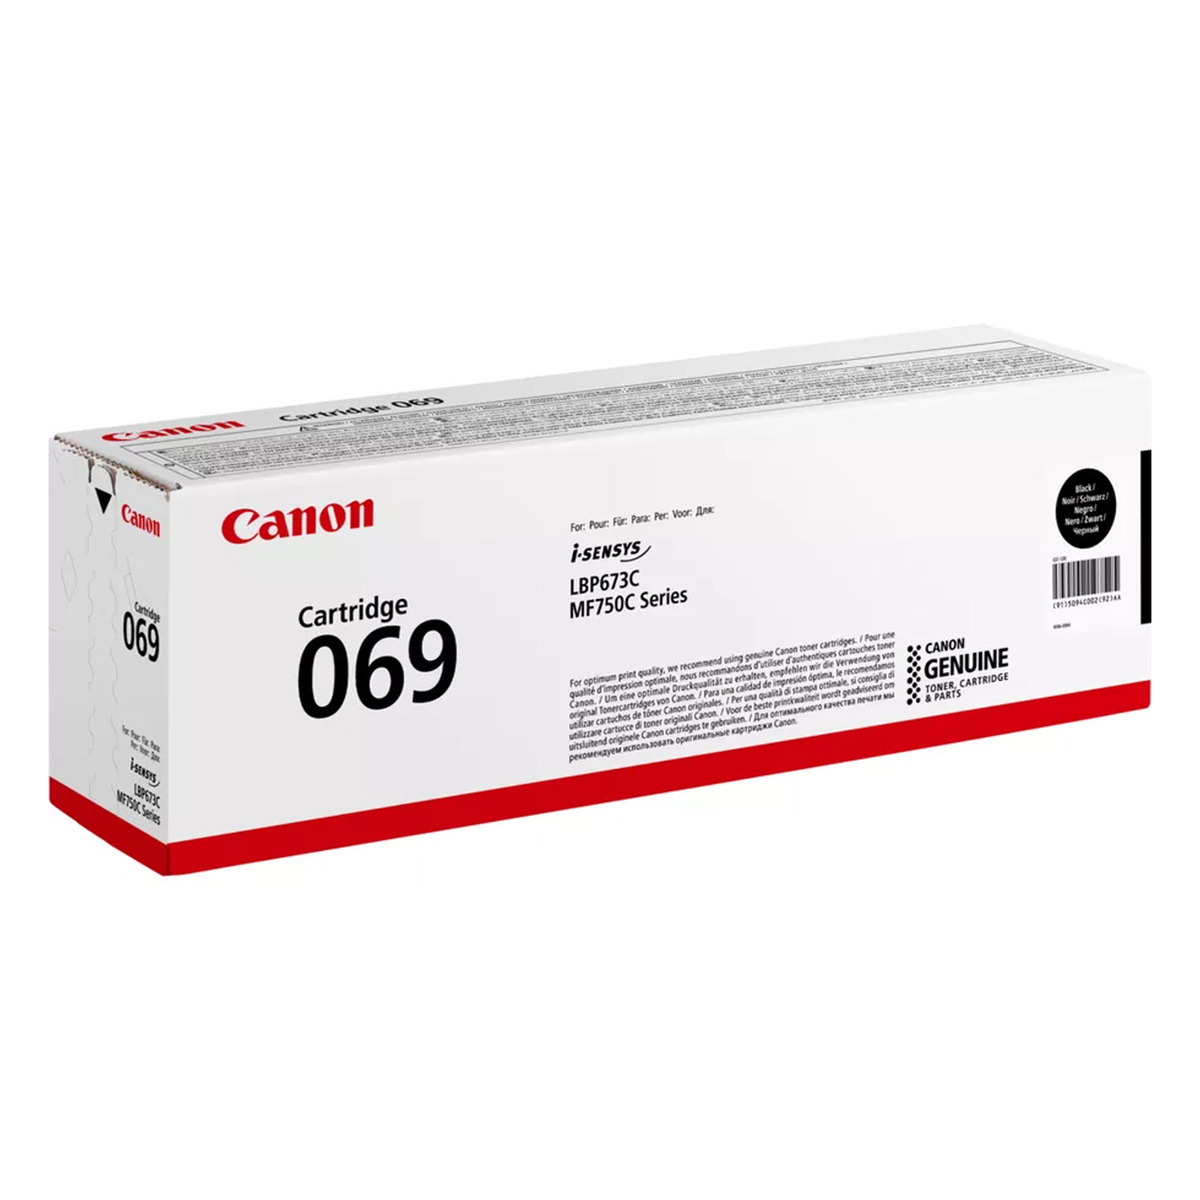 Canon Toner Cartridge, Black, 069